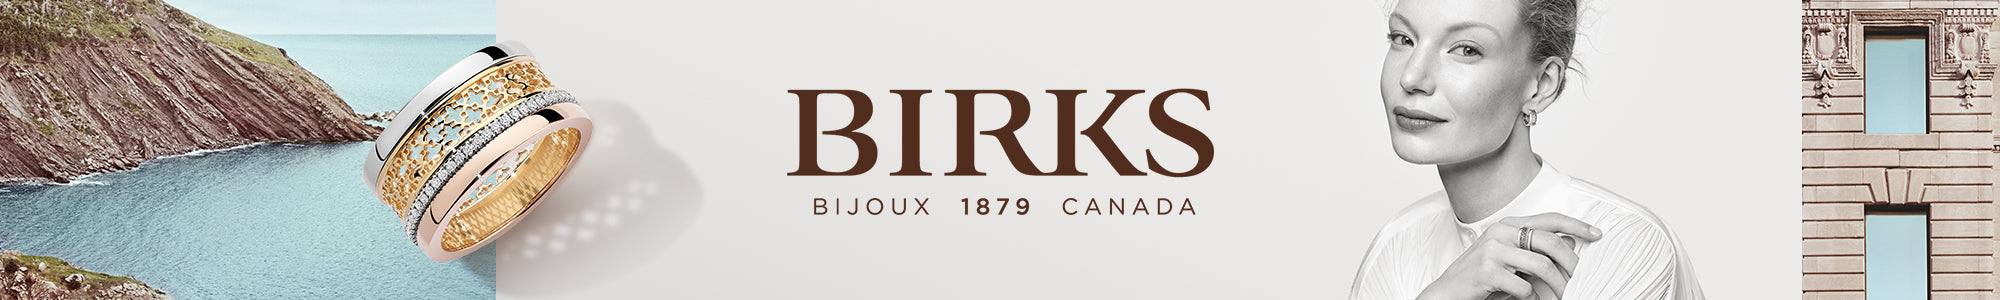 BIJOUX BIRKS Products